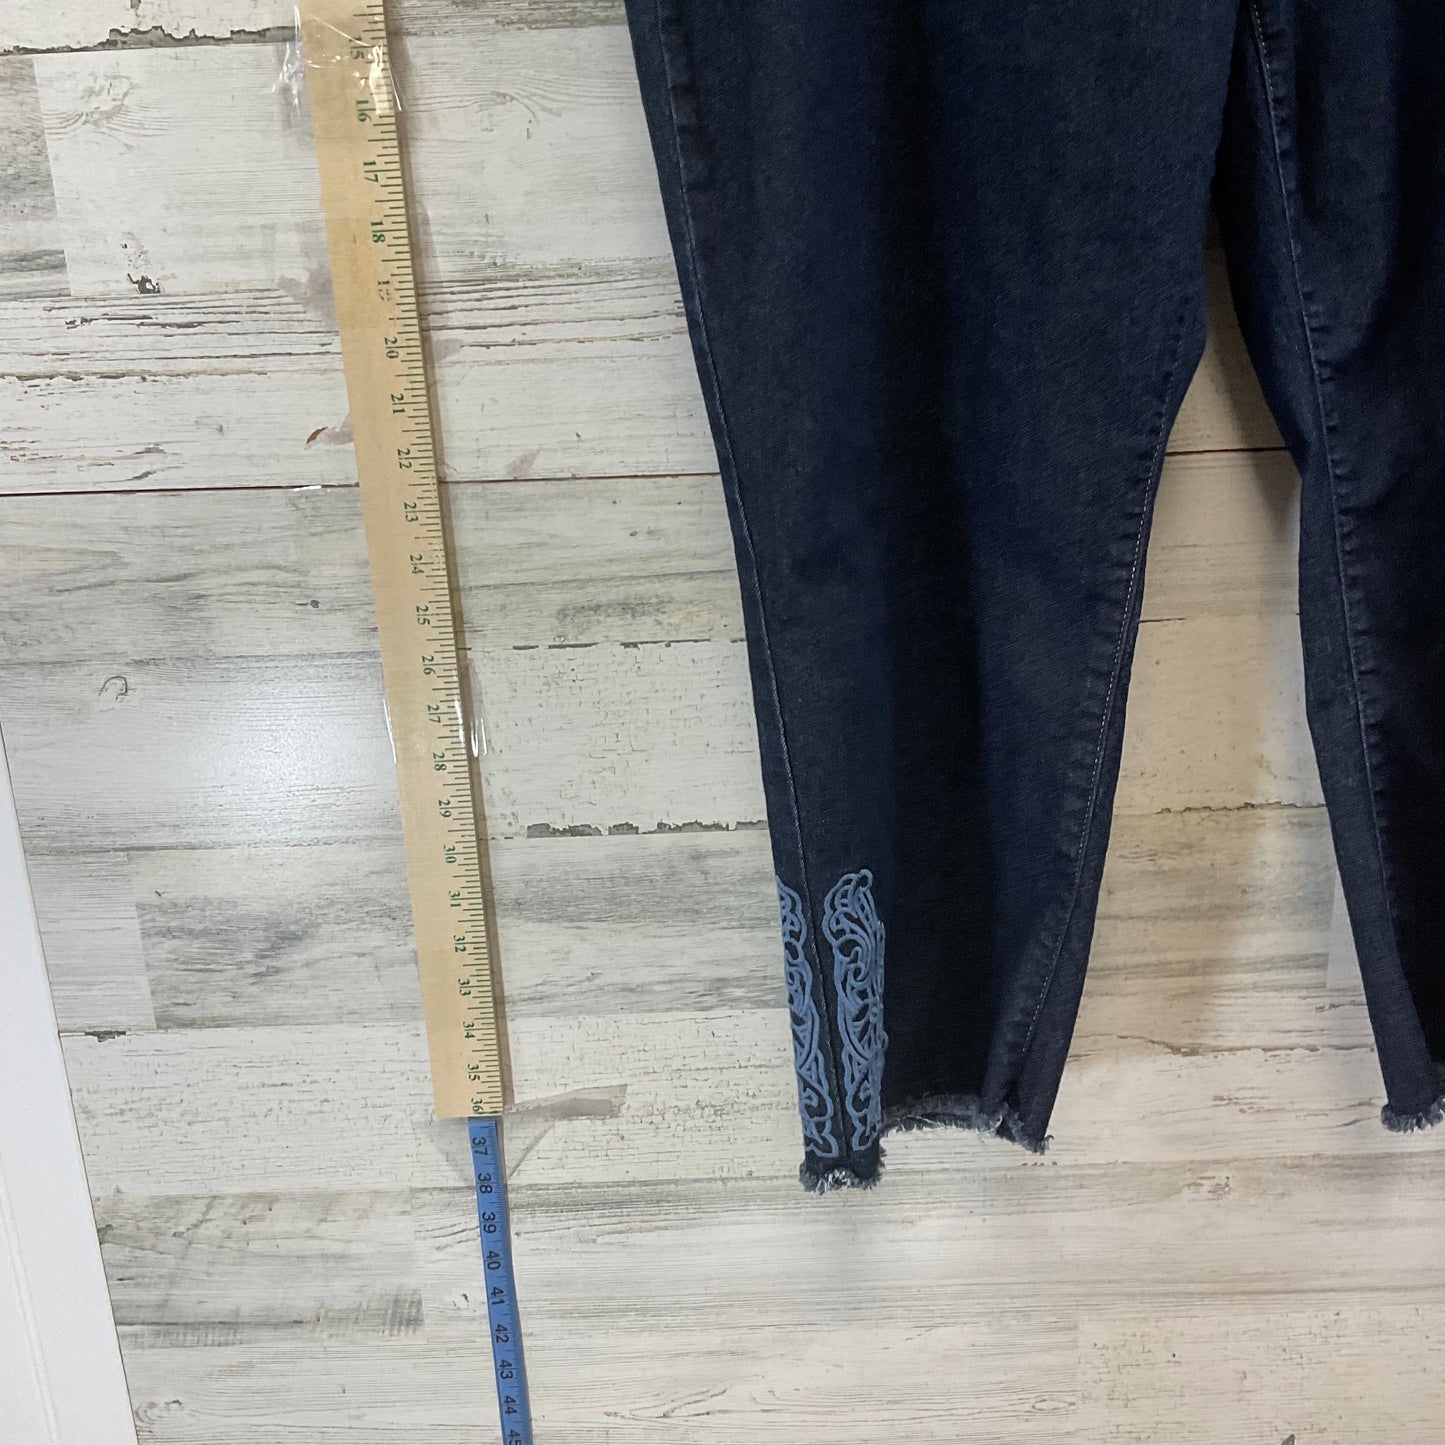 Jeans Jeggings By Susan Graver  Size: 20w